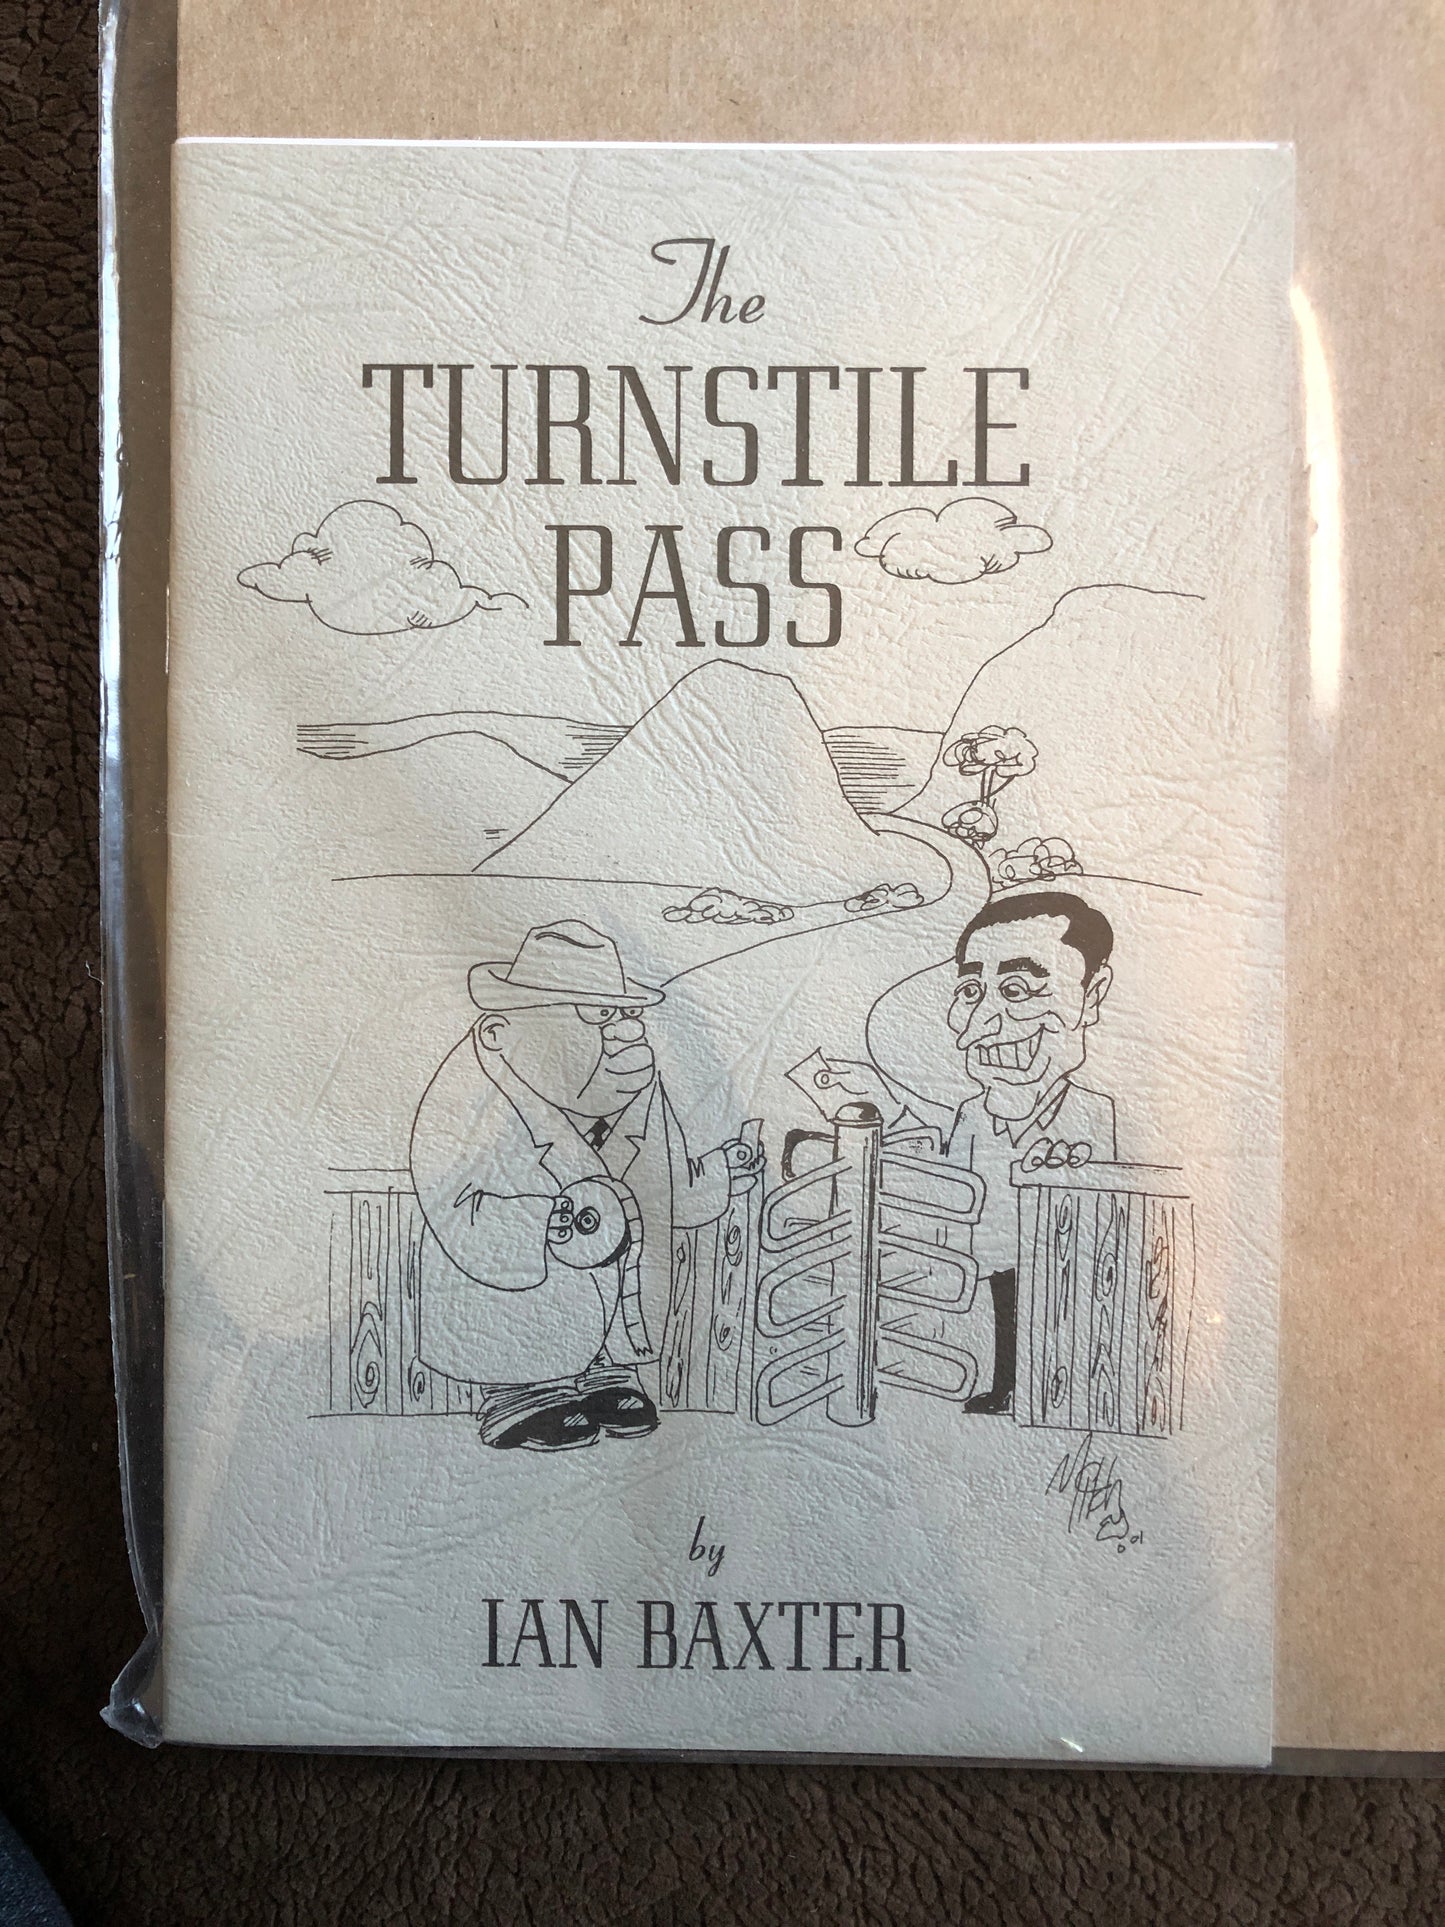 The Turnstile Pass (paperback edition) - Ian Baxter